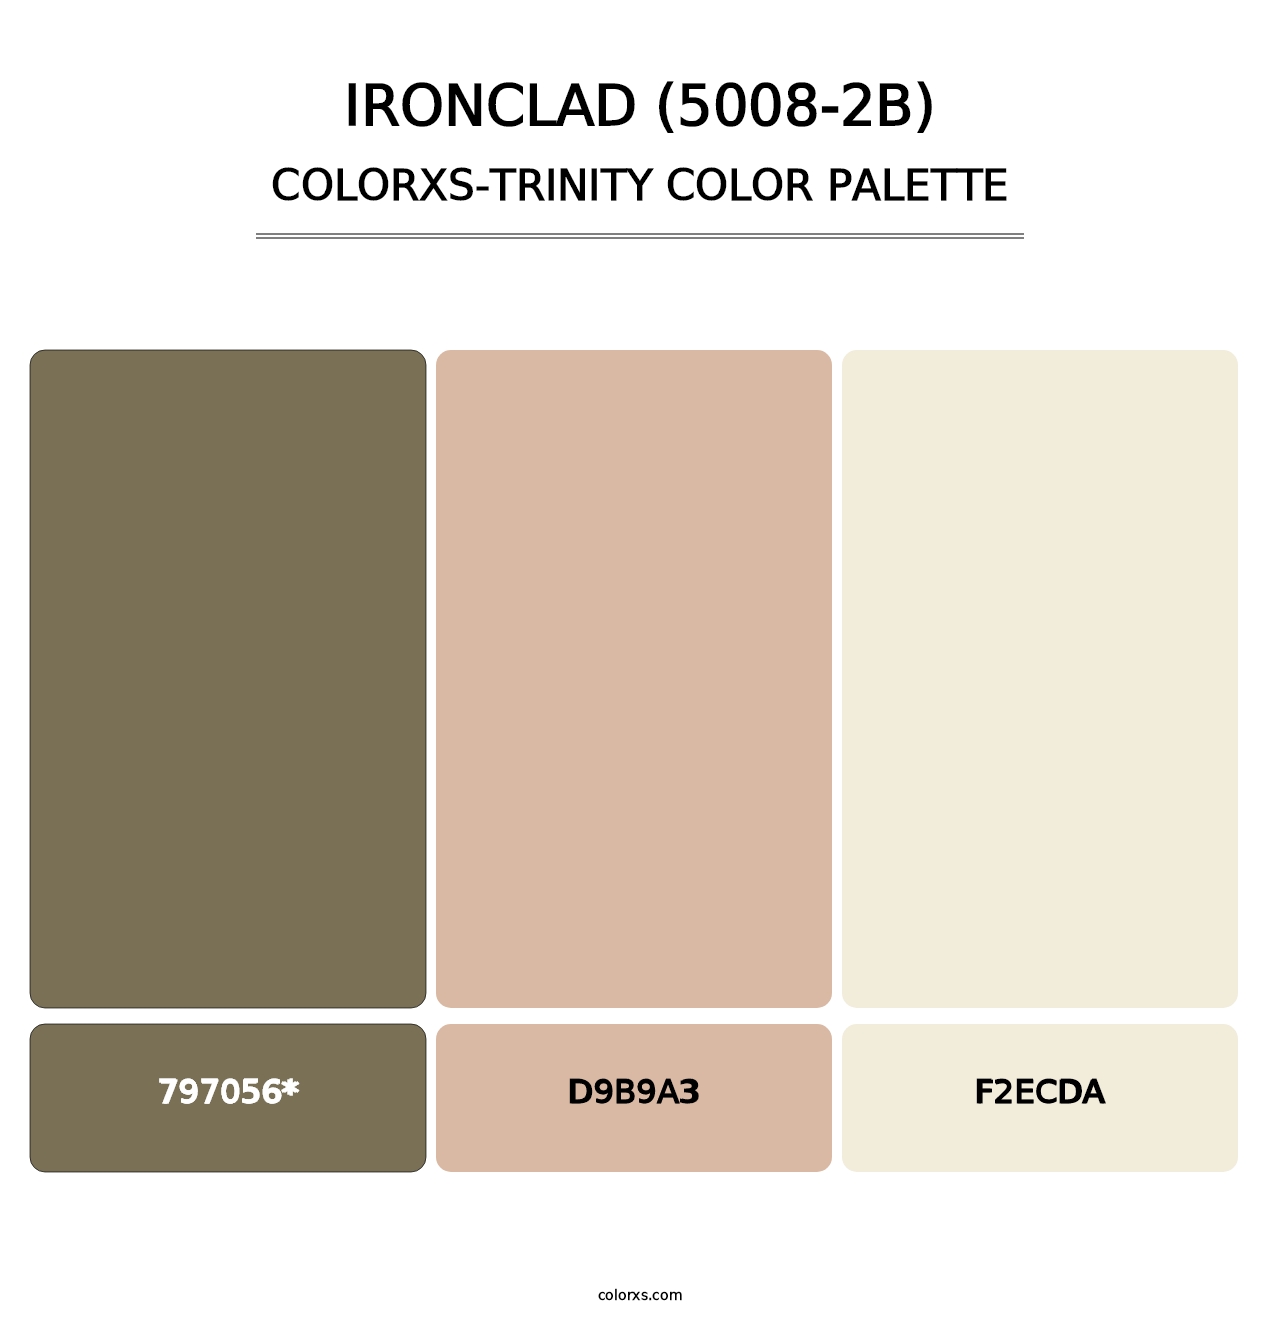 Ironclad (5008-2B) - Colorxs Trinity Palette